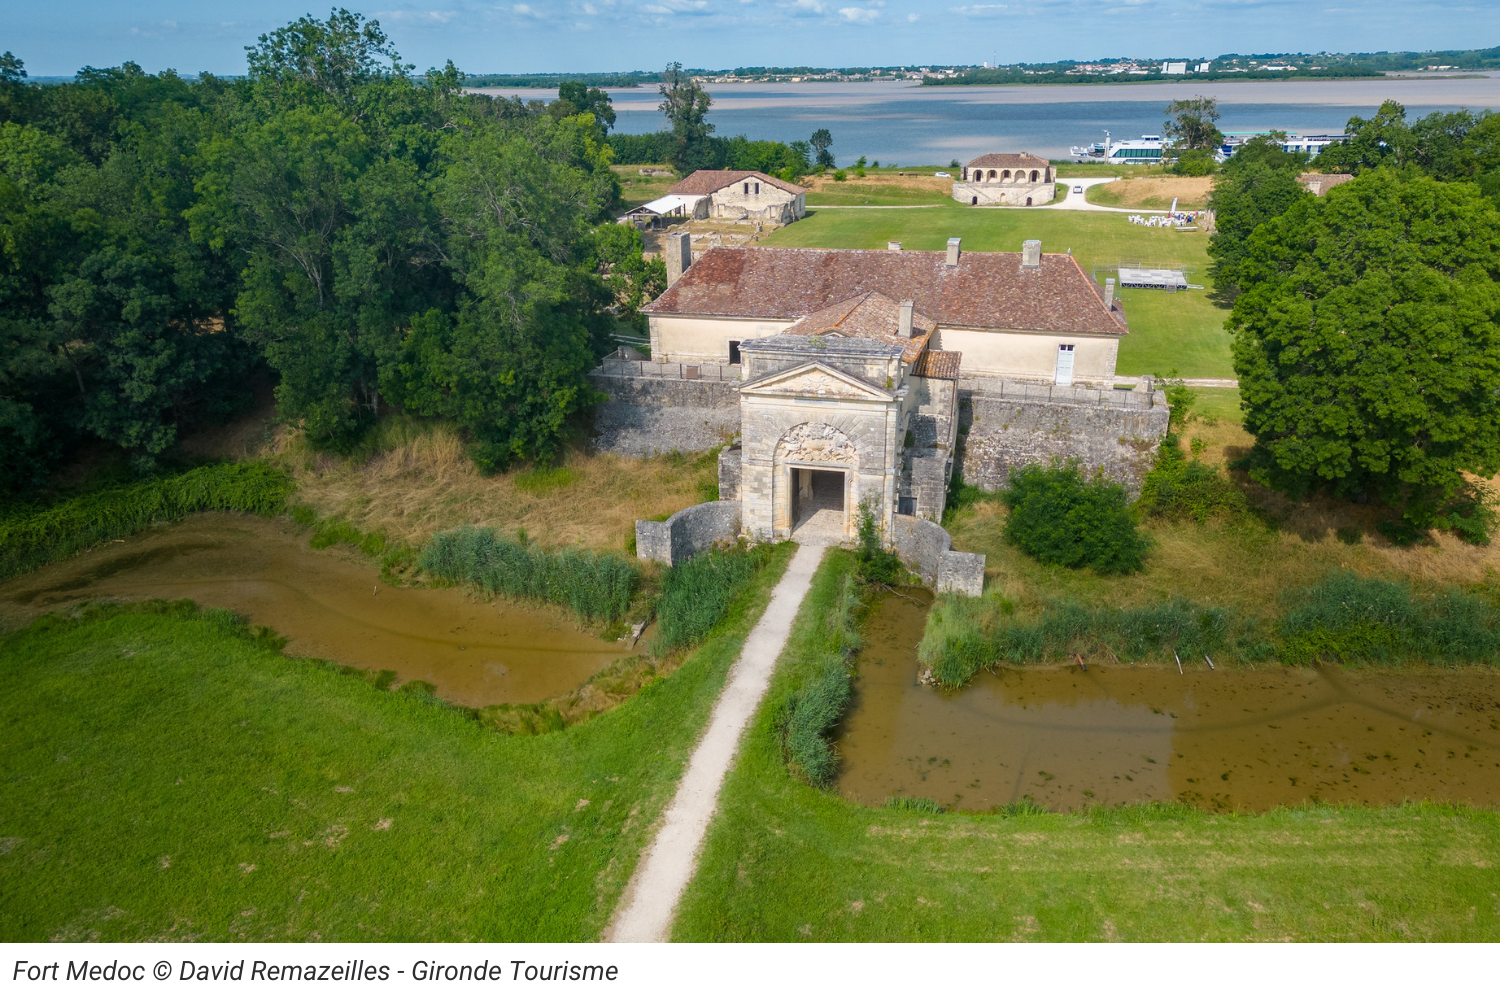 Fort Medoc © David Remazeilles - Gironde Tourisme